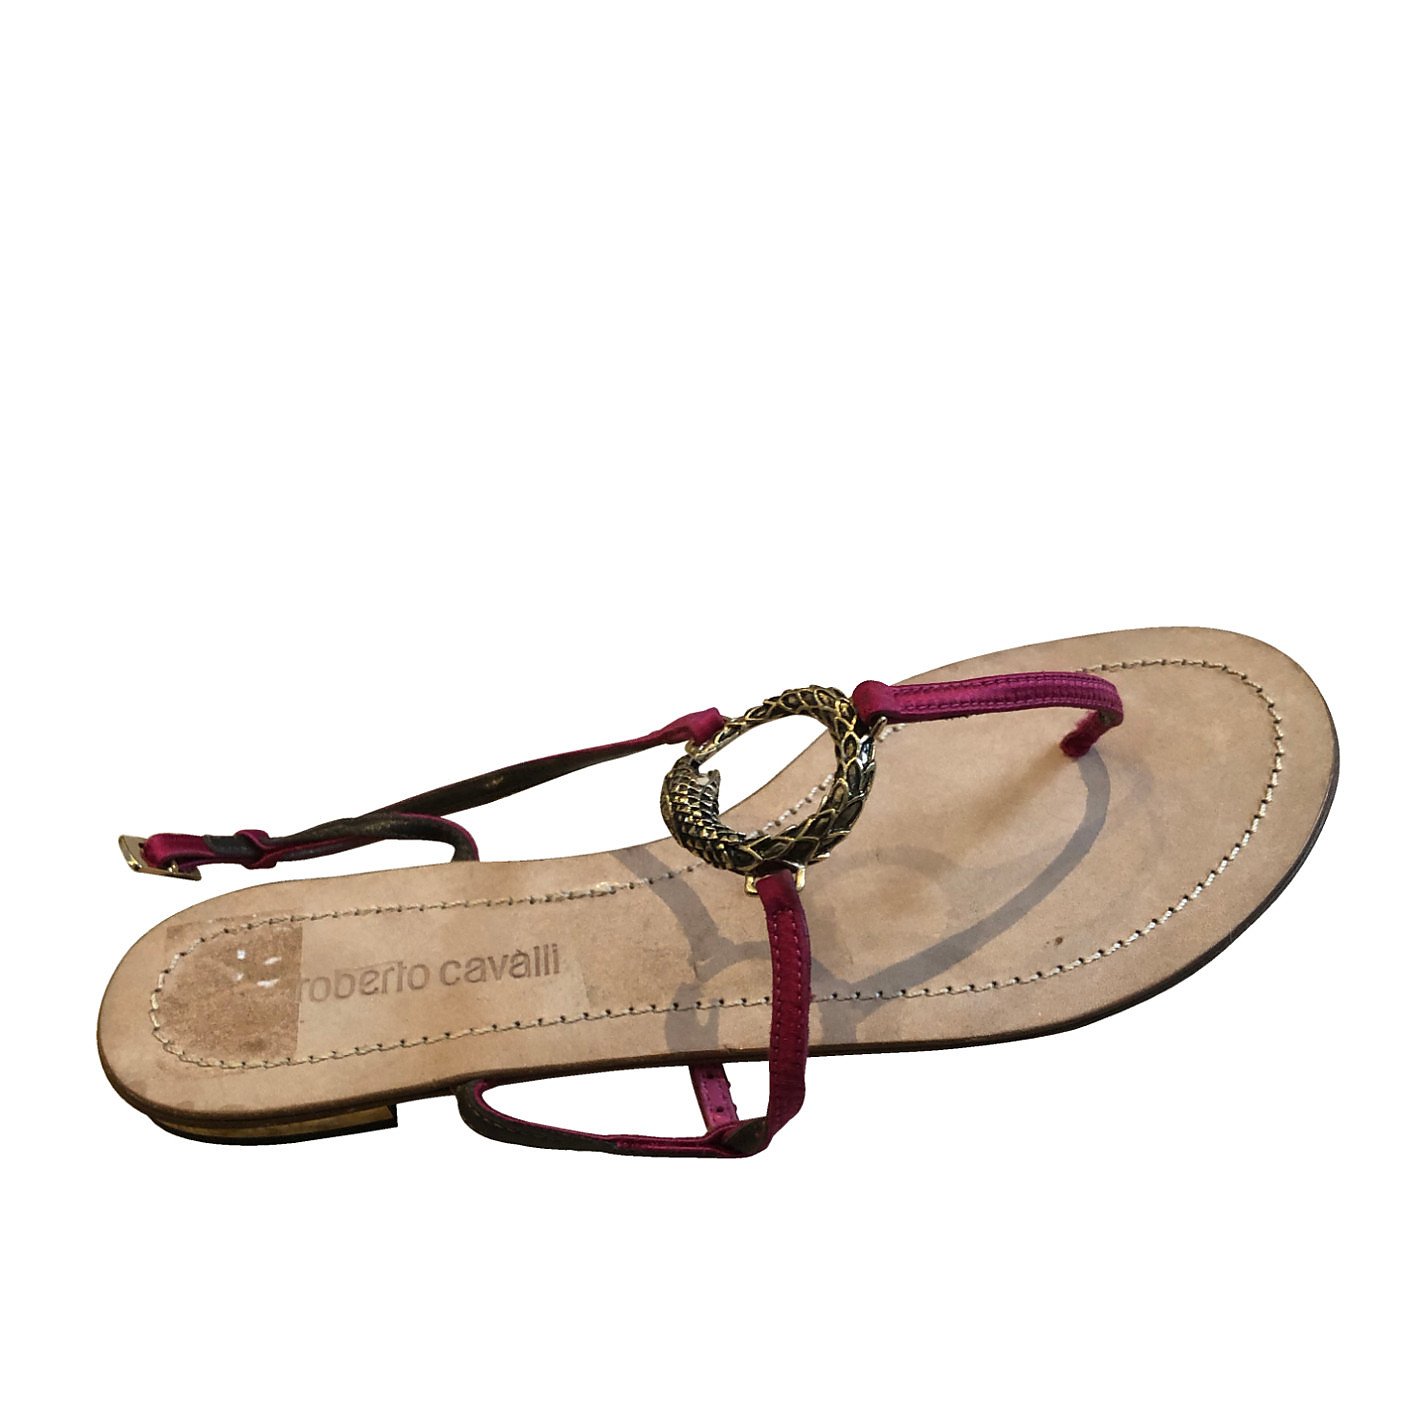 Roberto Cavalli Snake-Detail Flat Sandals